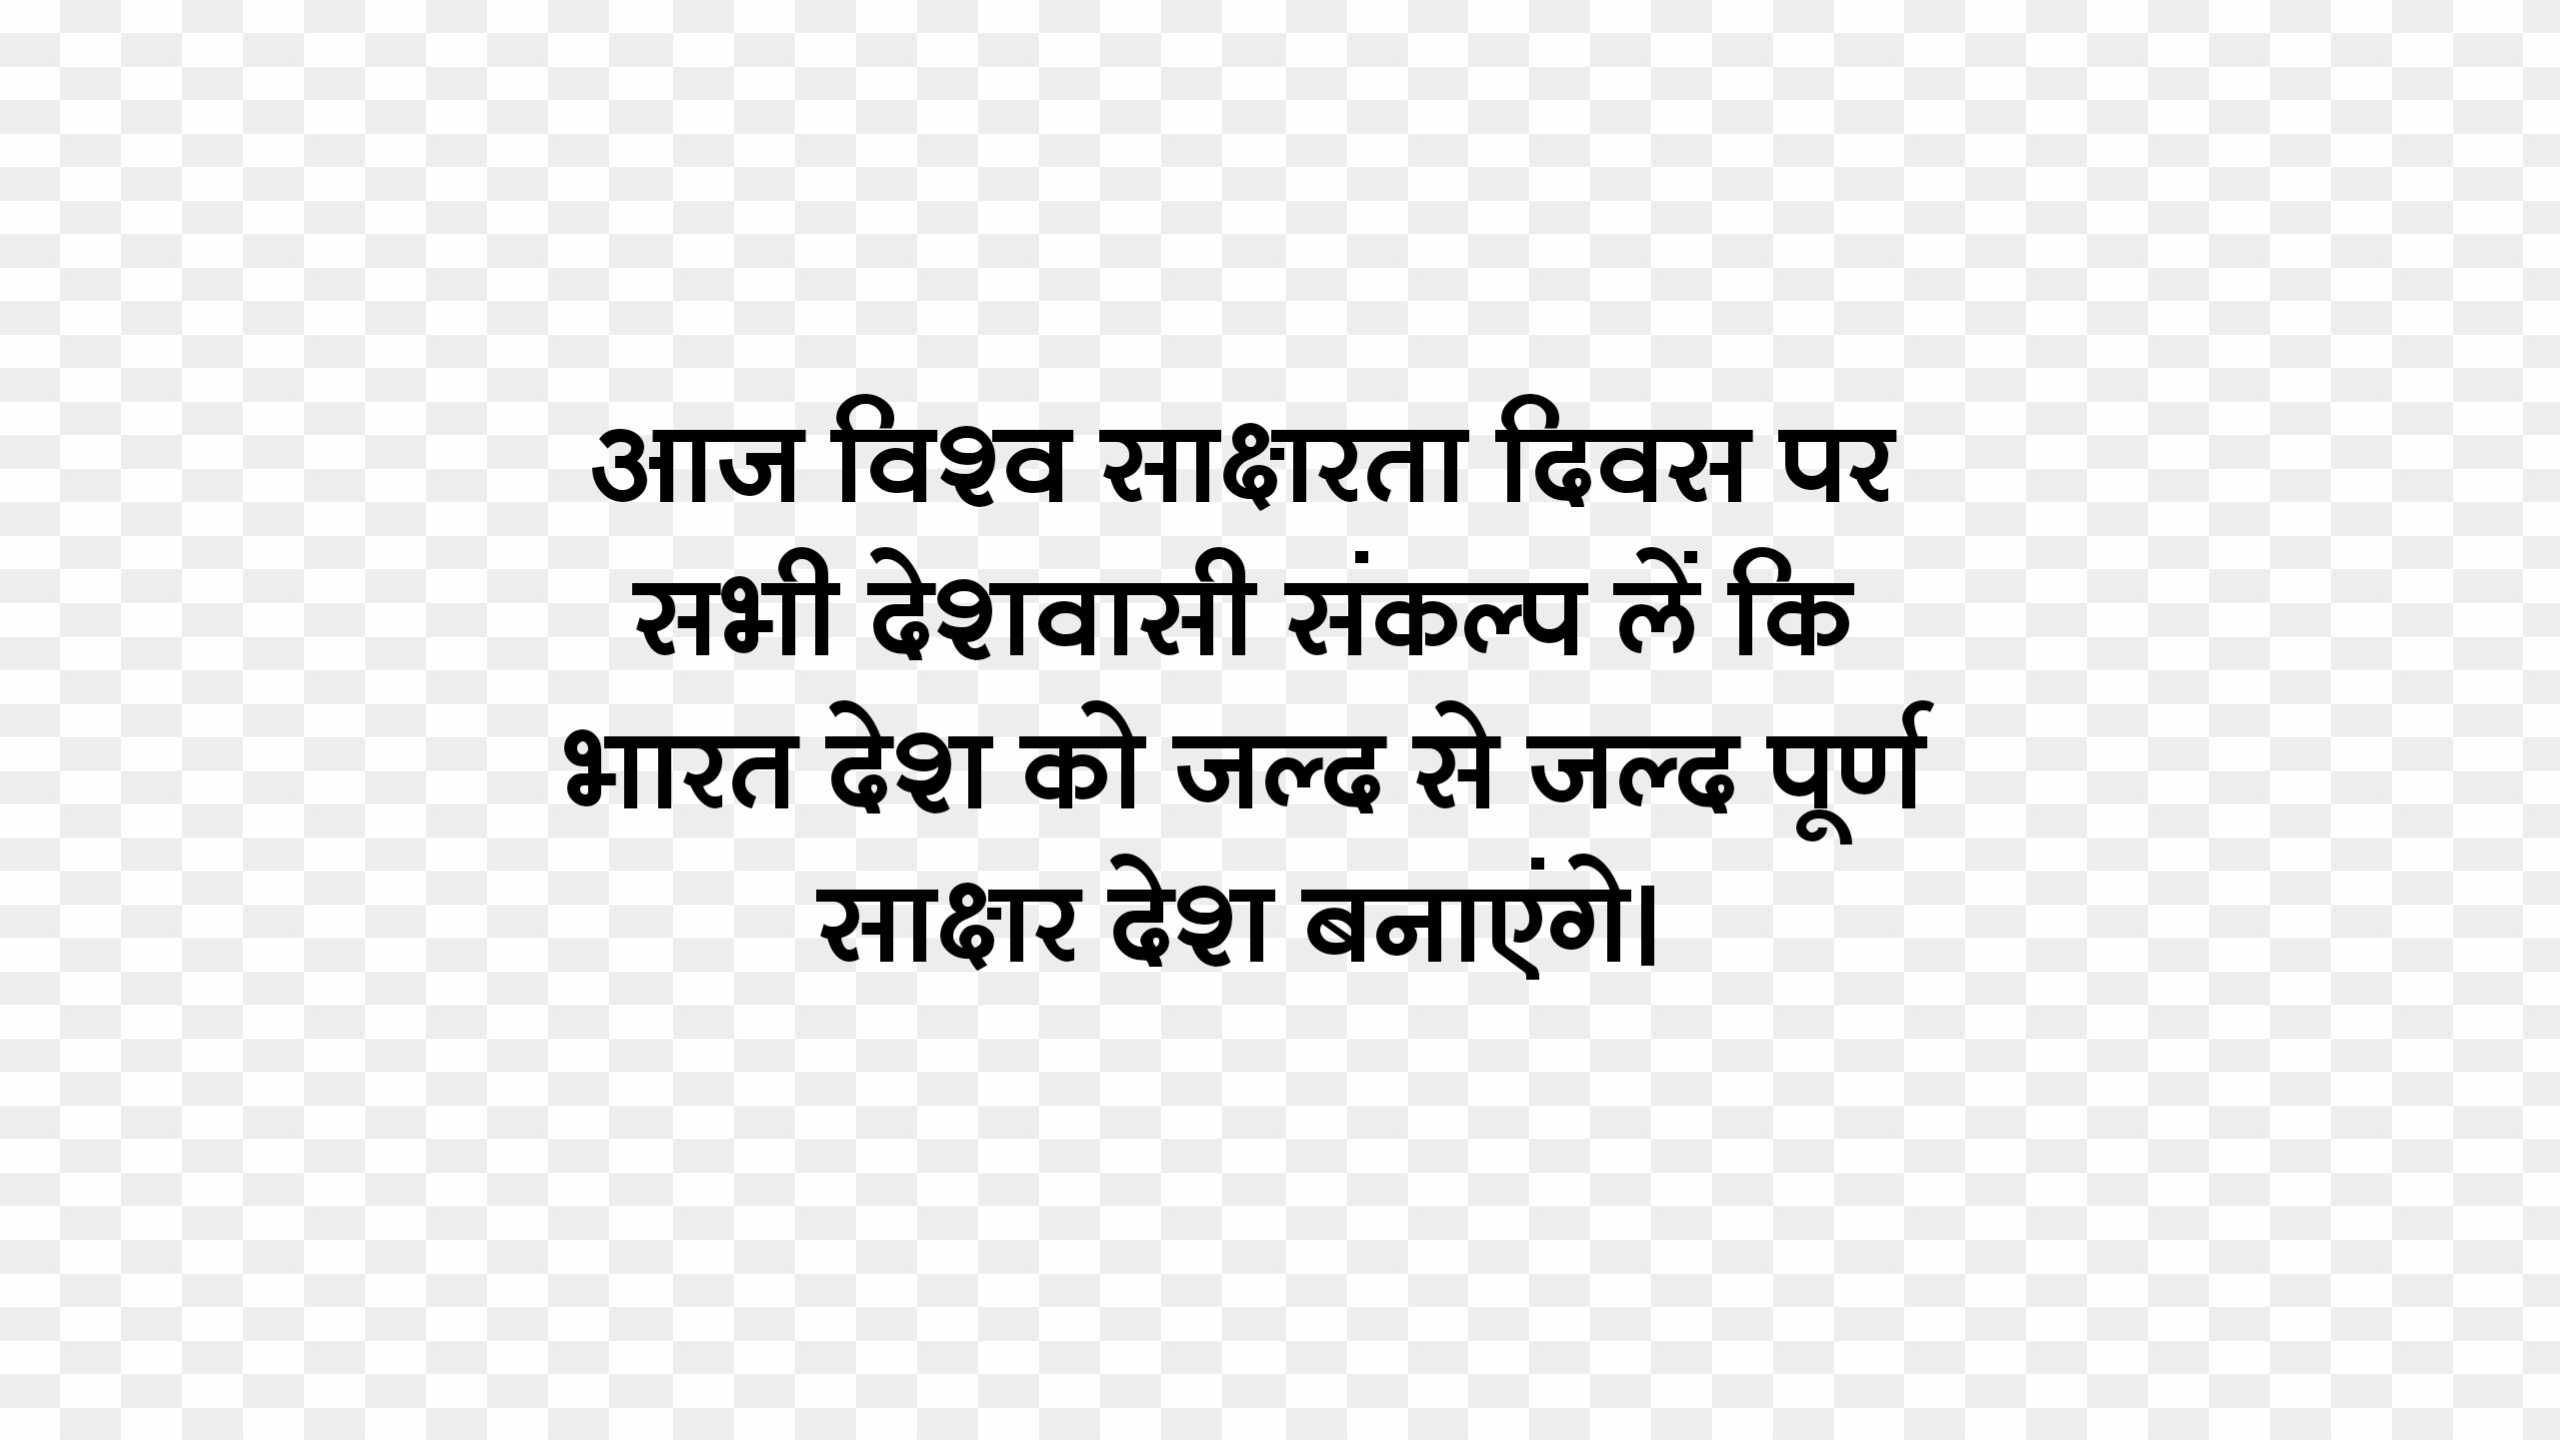 saksharta Divas quotes in Hindi text PNG 